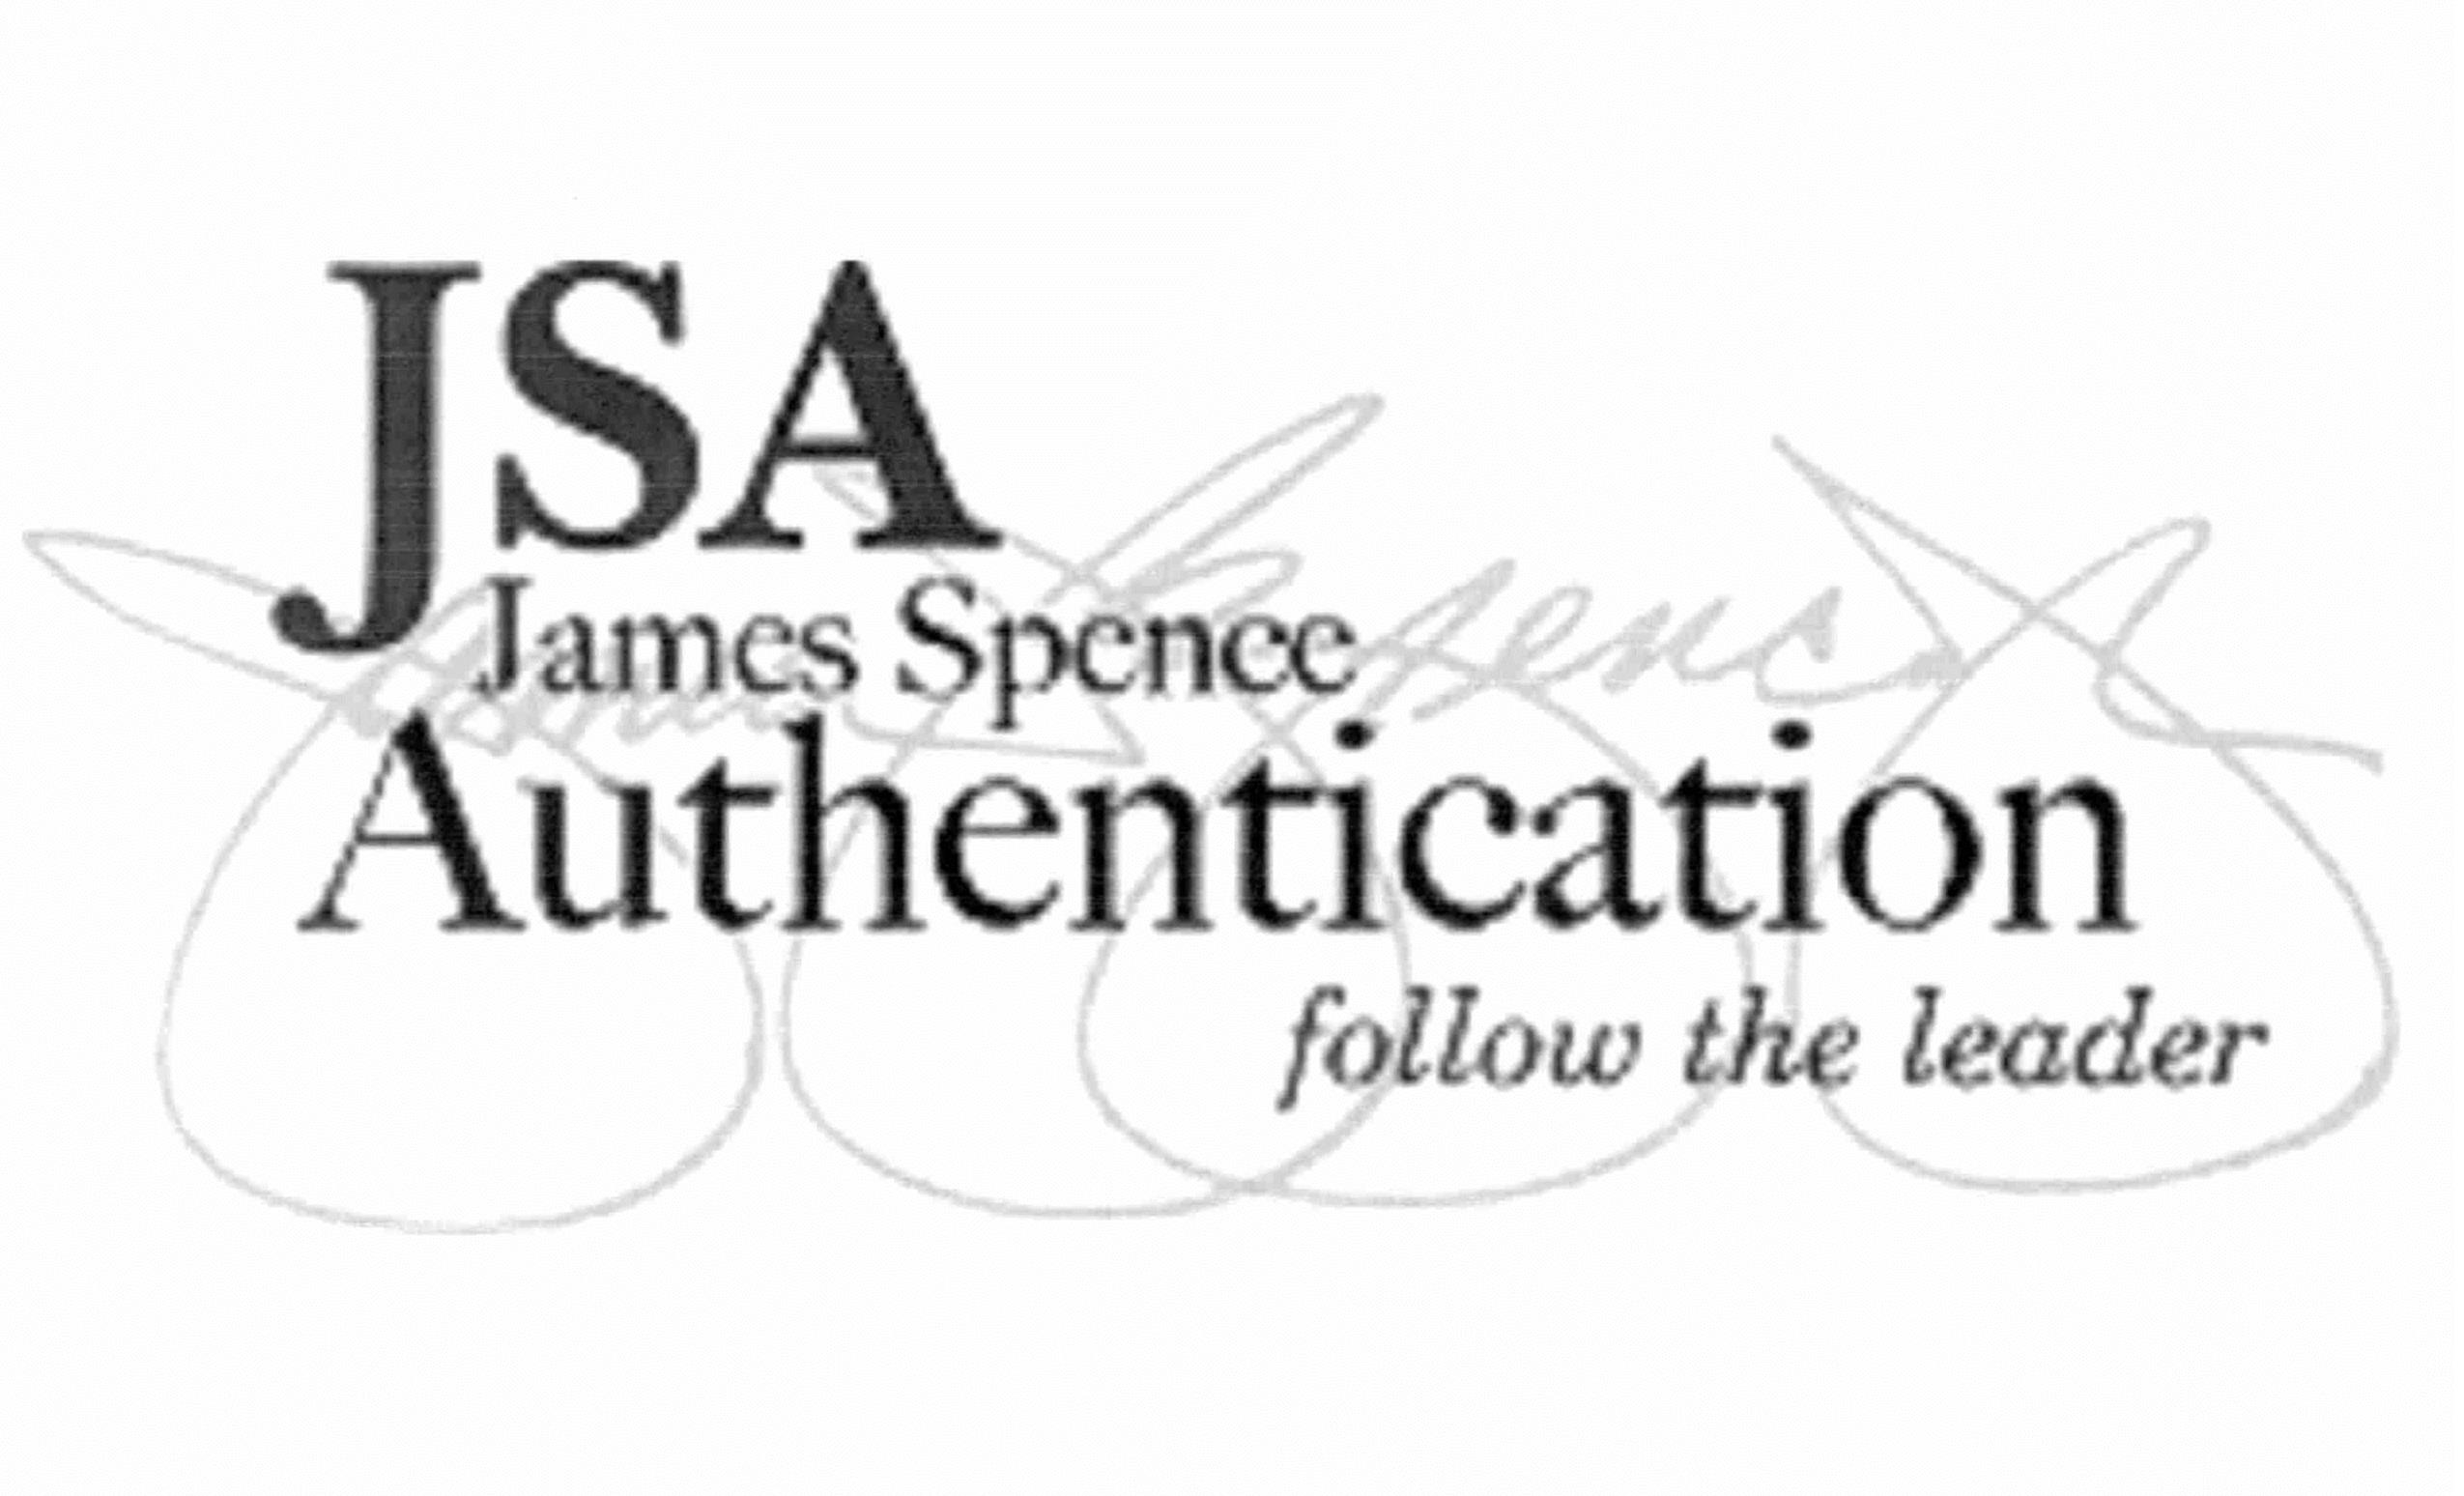  JSA JAMES SPENCE AUTHENTICATION FOLLOW THE LEADER JAMES J SPENCE JR